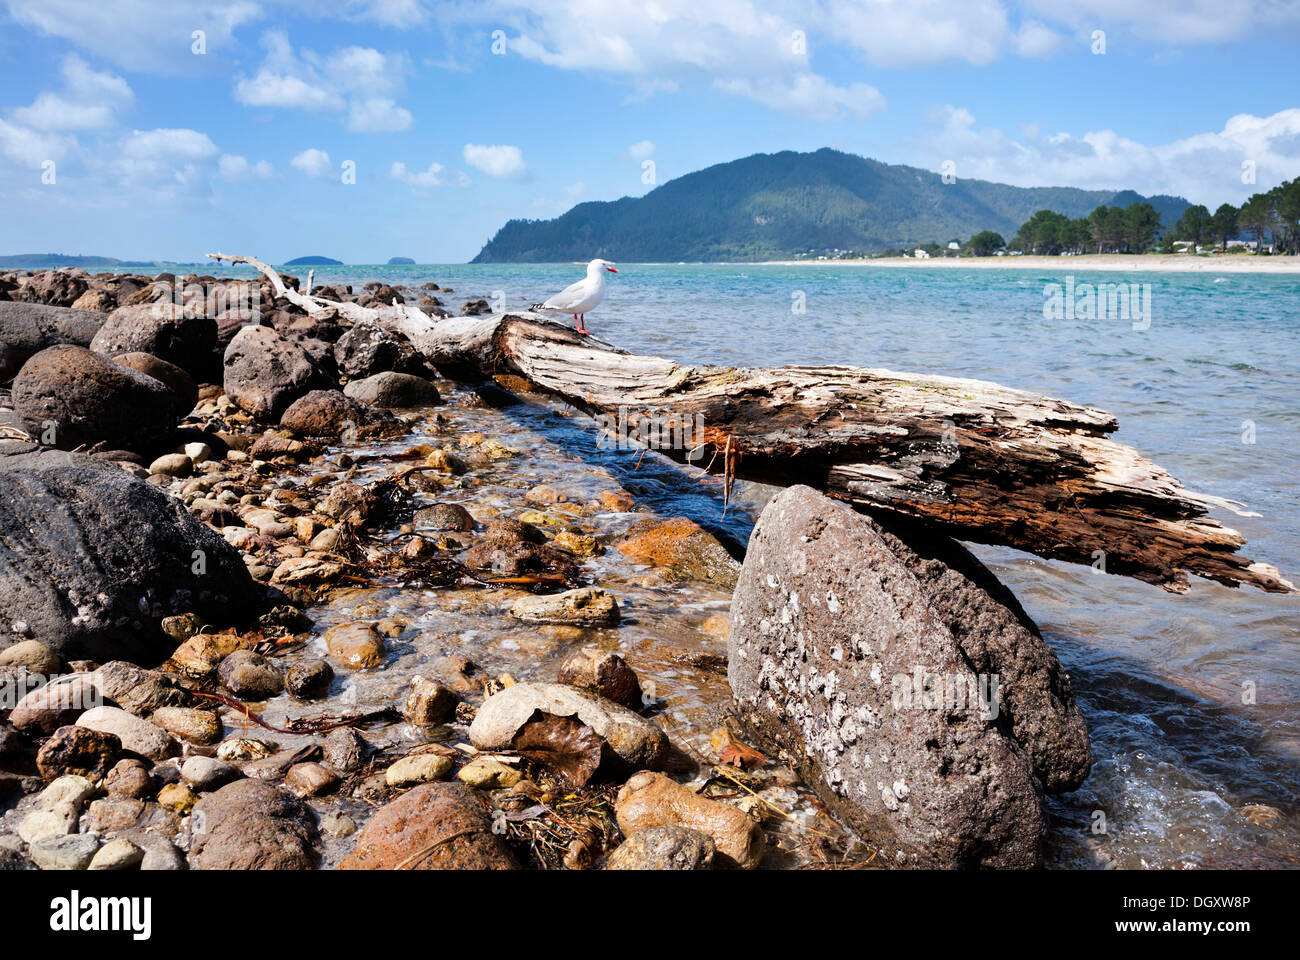 The coastal resort of Tairua, Coromandel Penisula, New Zealand. Stock Photo